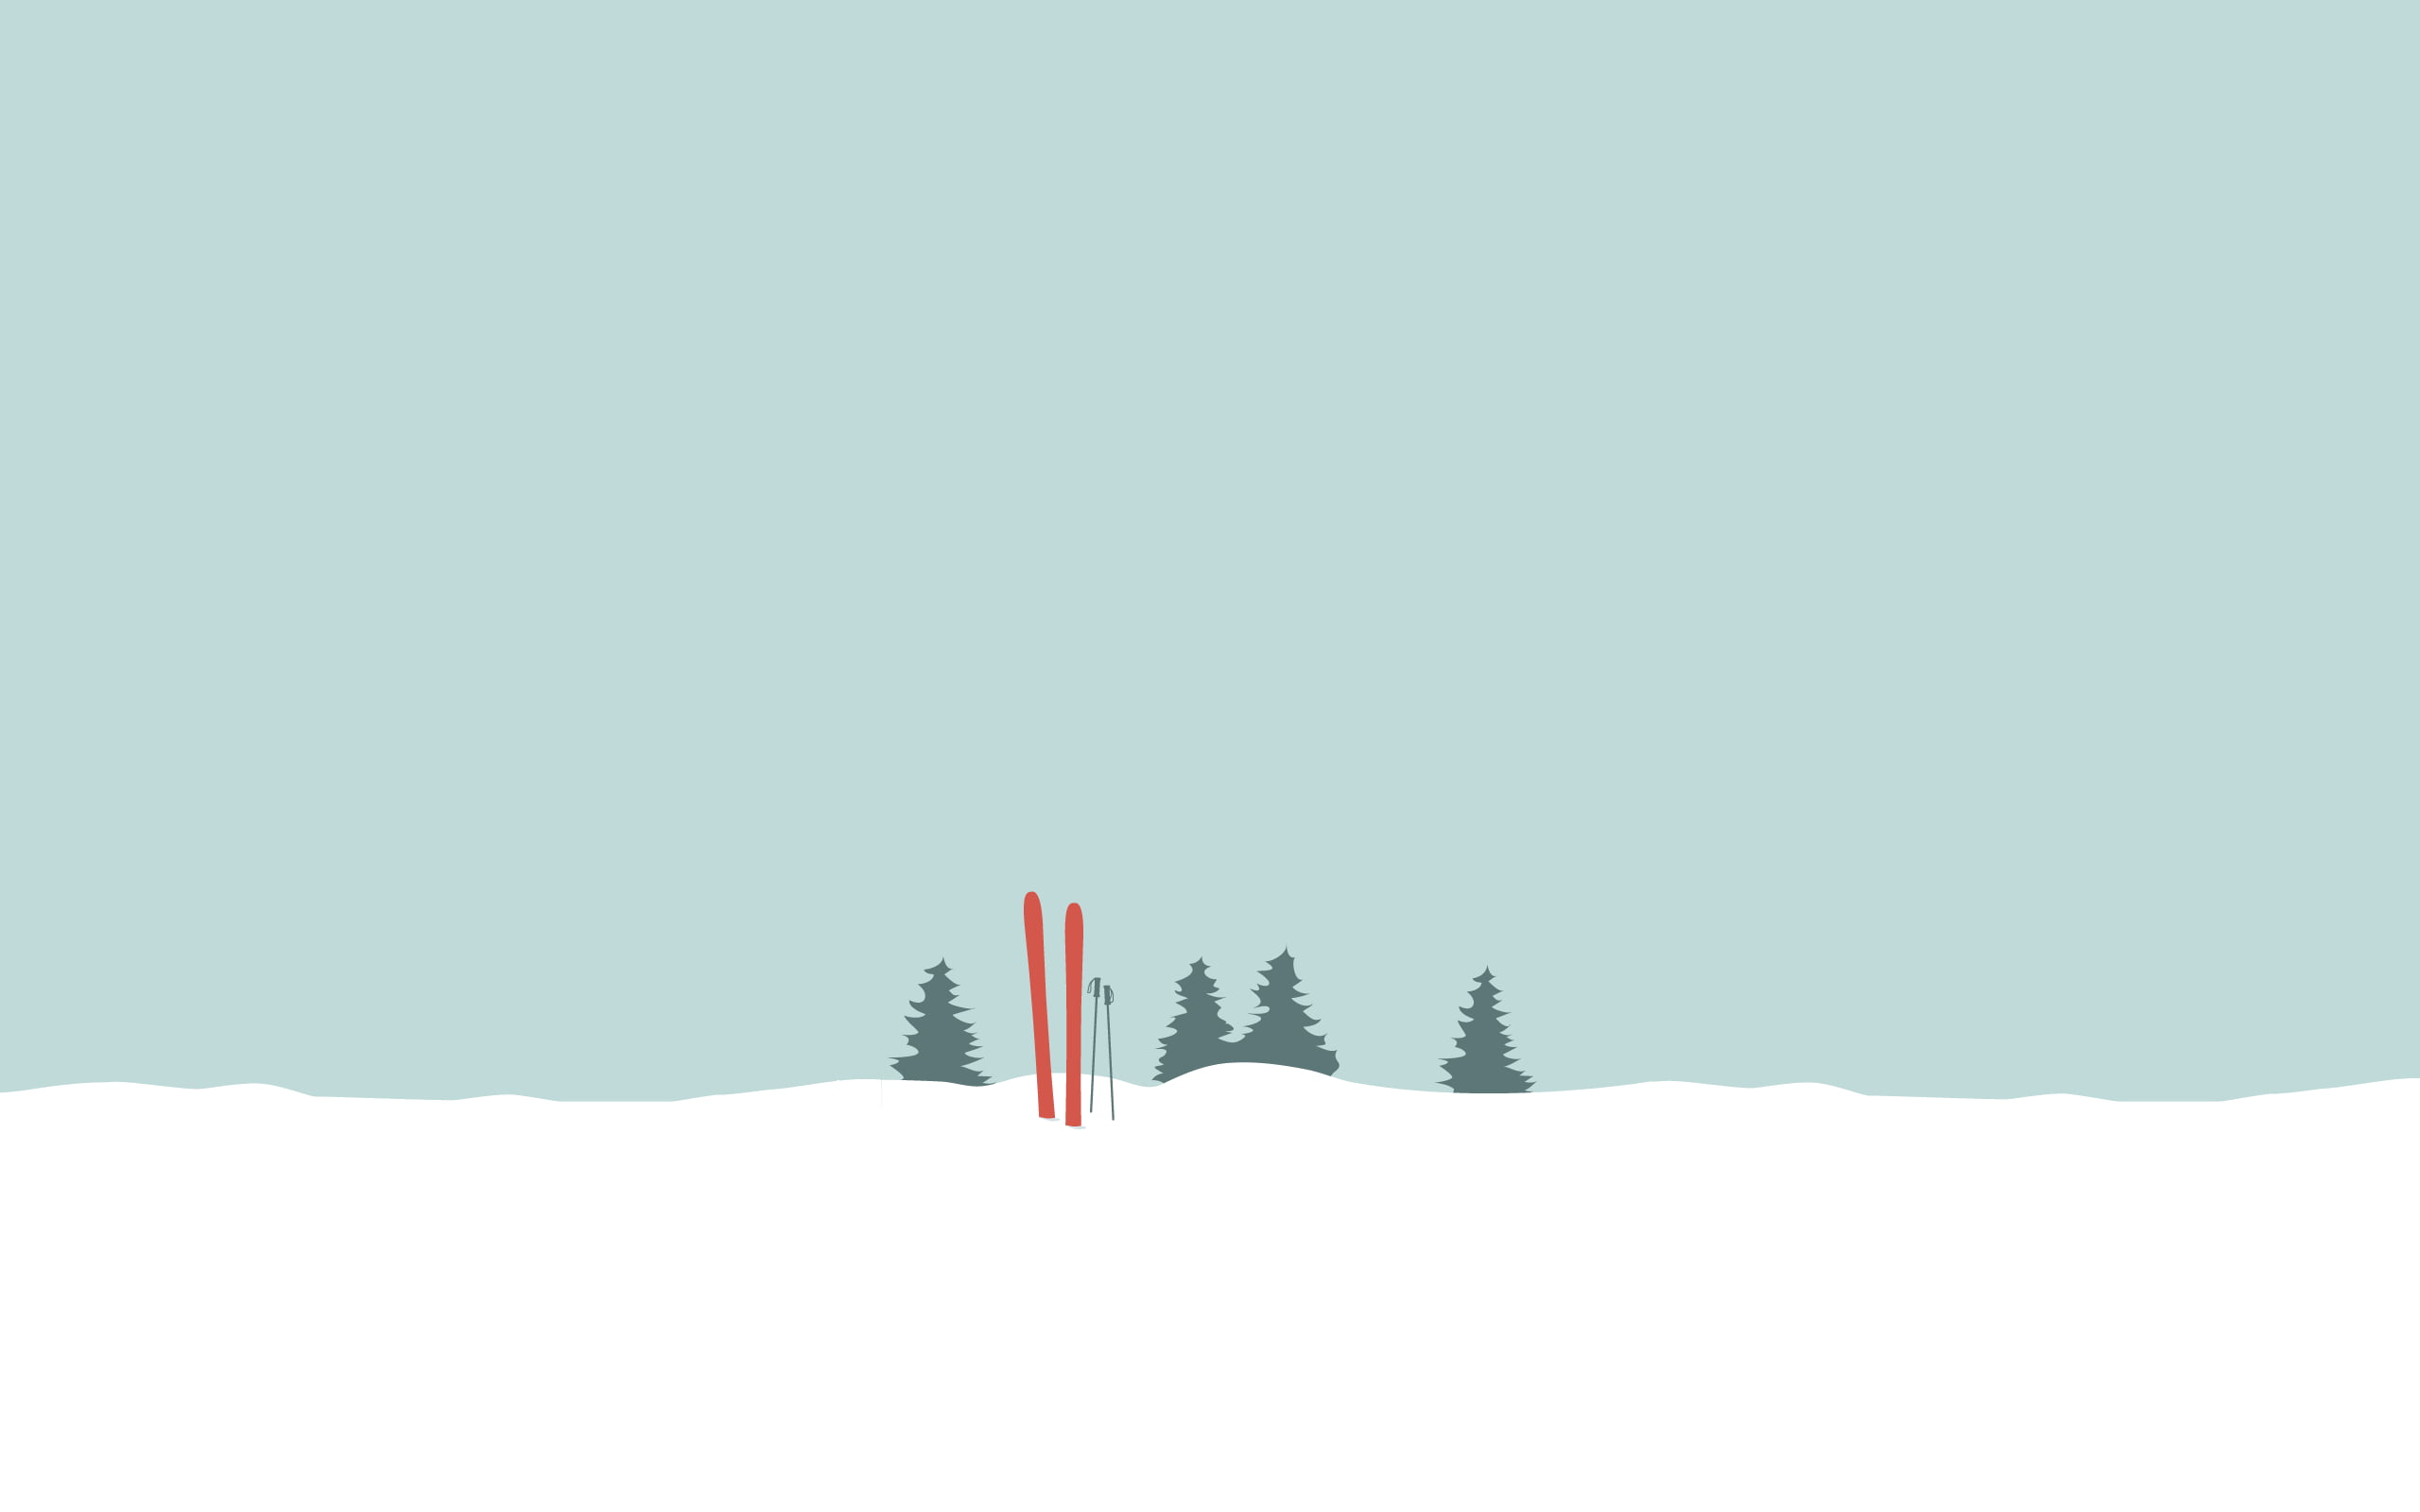 pine trees illustration, winter, snow, pine trees, skis